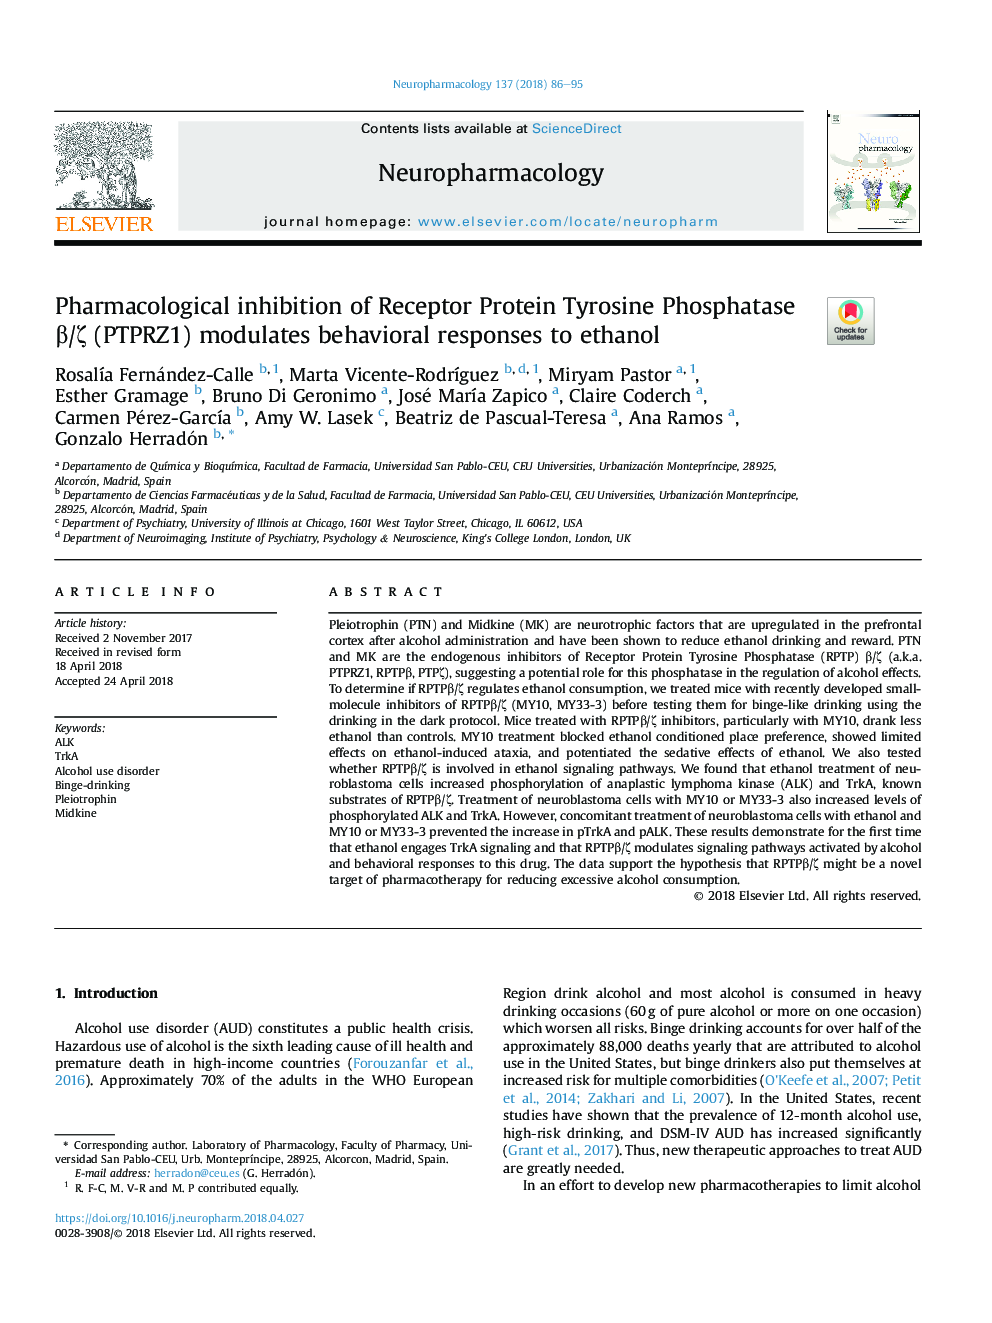 Pharmacological inhibition of Receptor Protein Tyrosine Phosphatase Î²/Î¶ (PTPRZ1) modulates behavioral responses to ethanol